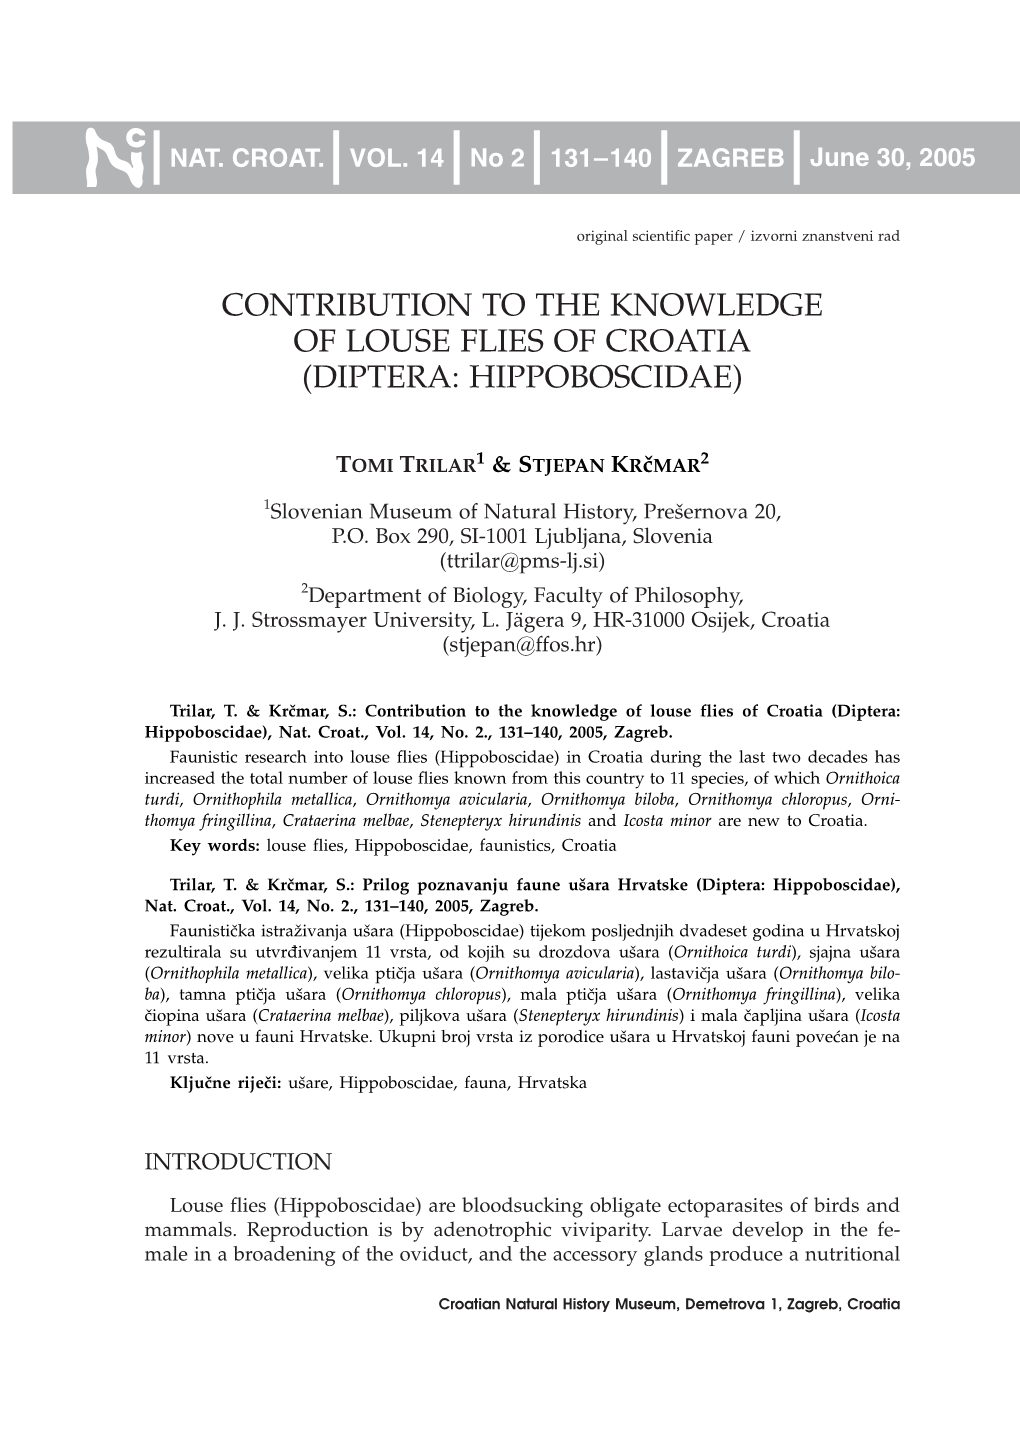 Contribution to the Knowledge of Louse Flies of Croatia (Diptera: Hippoboscidae)